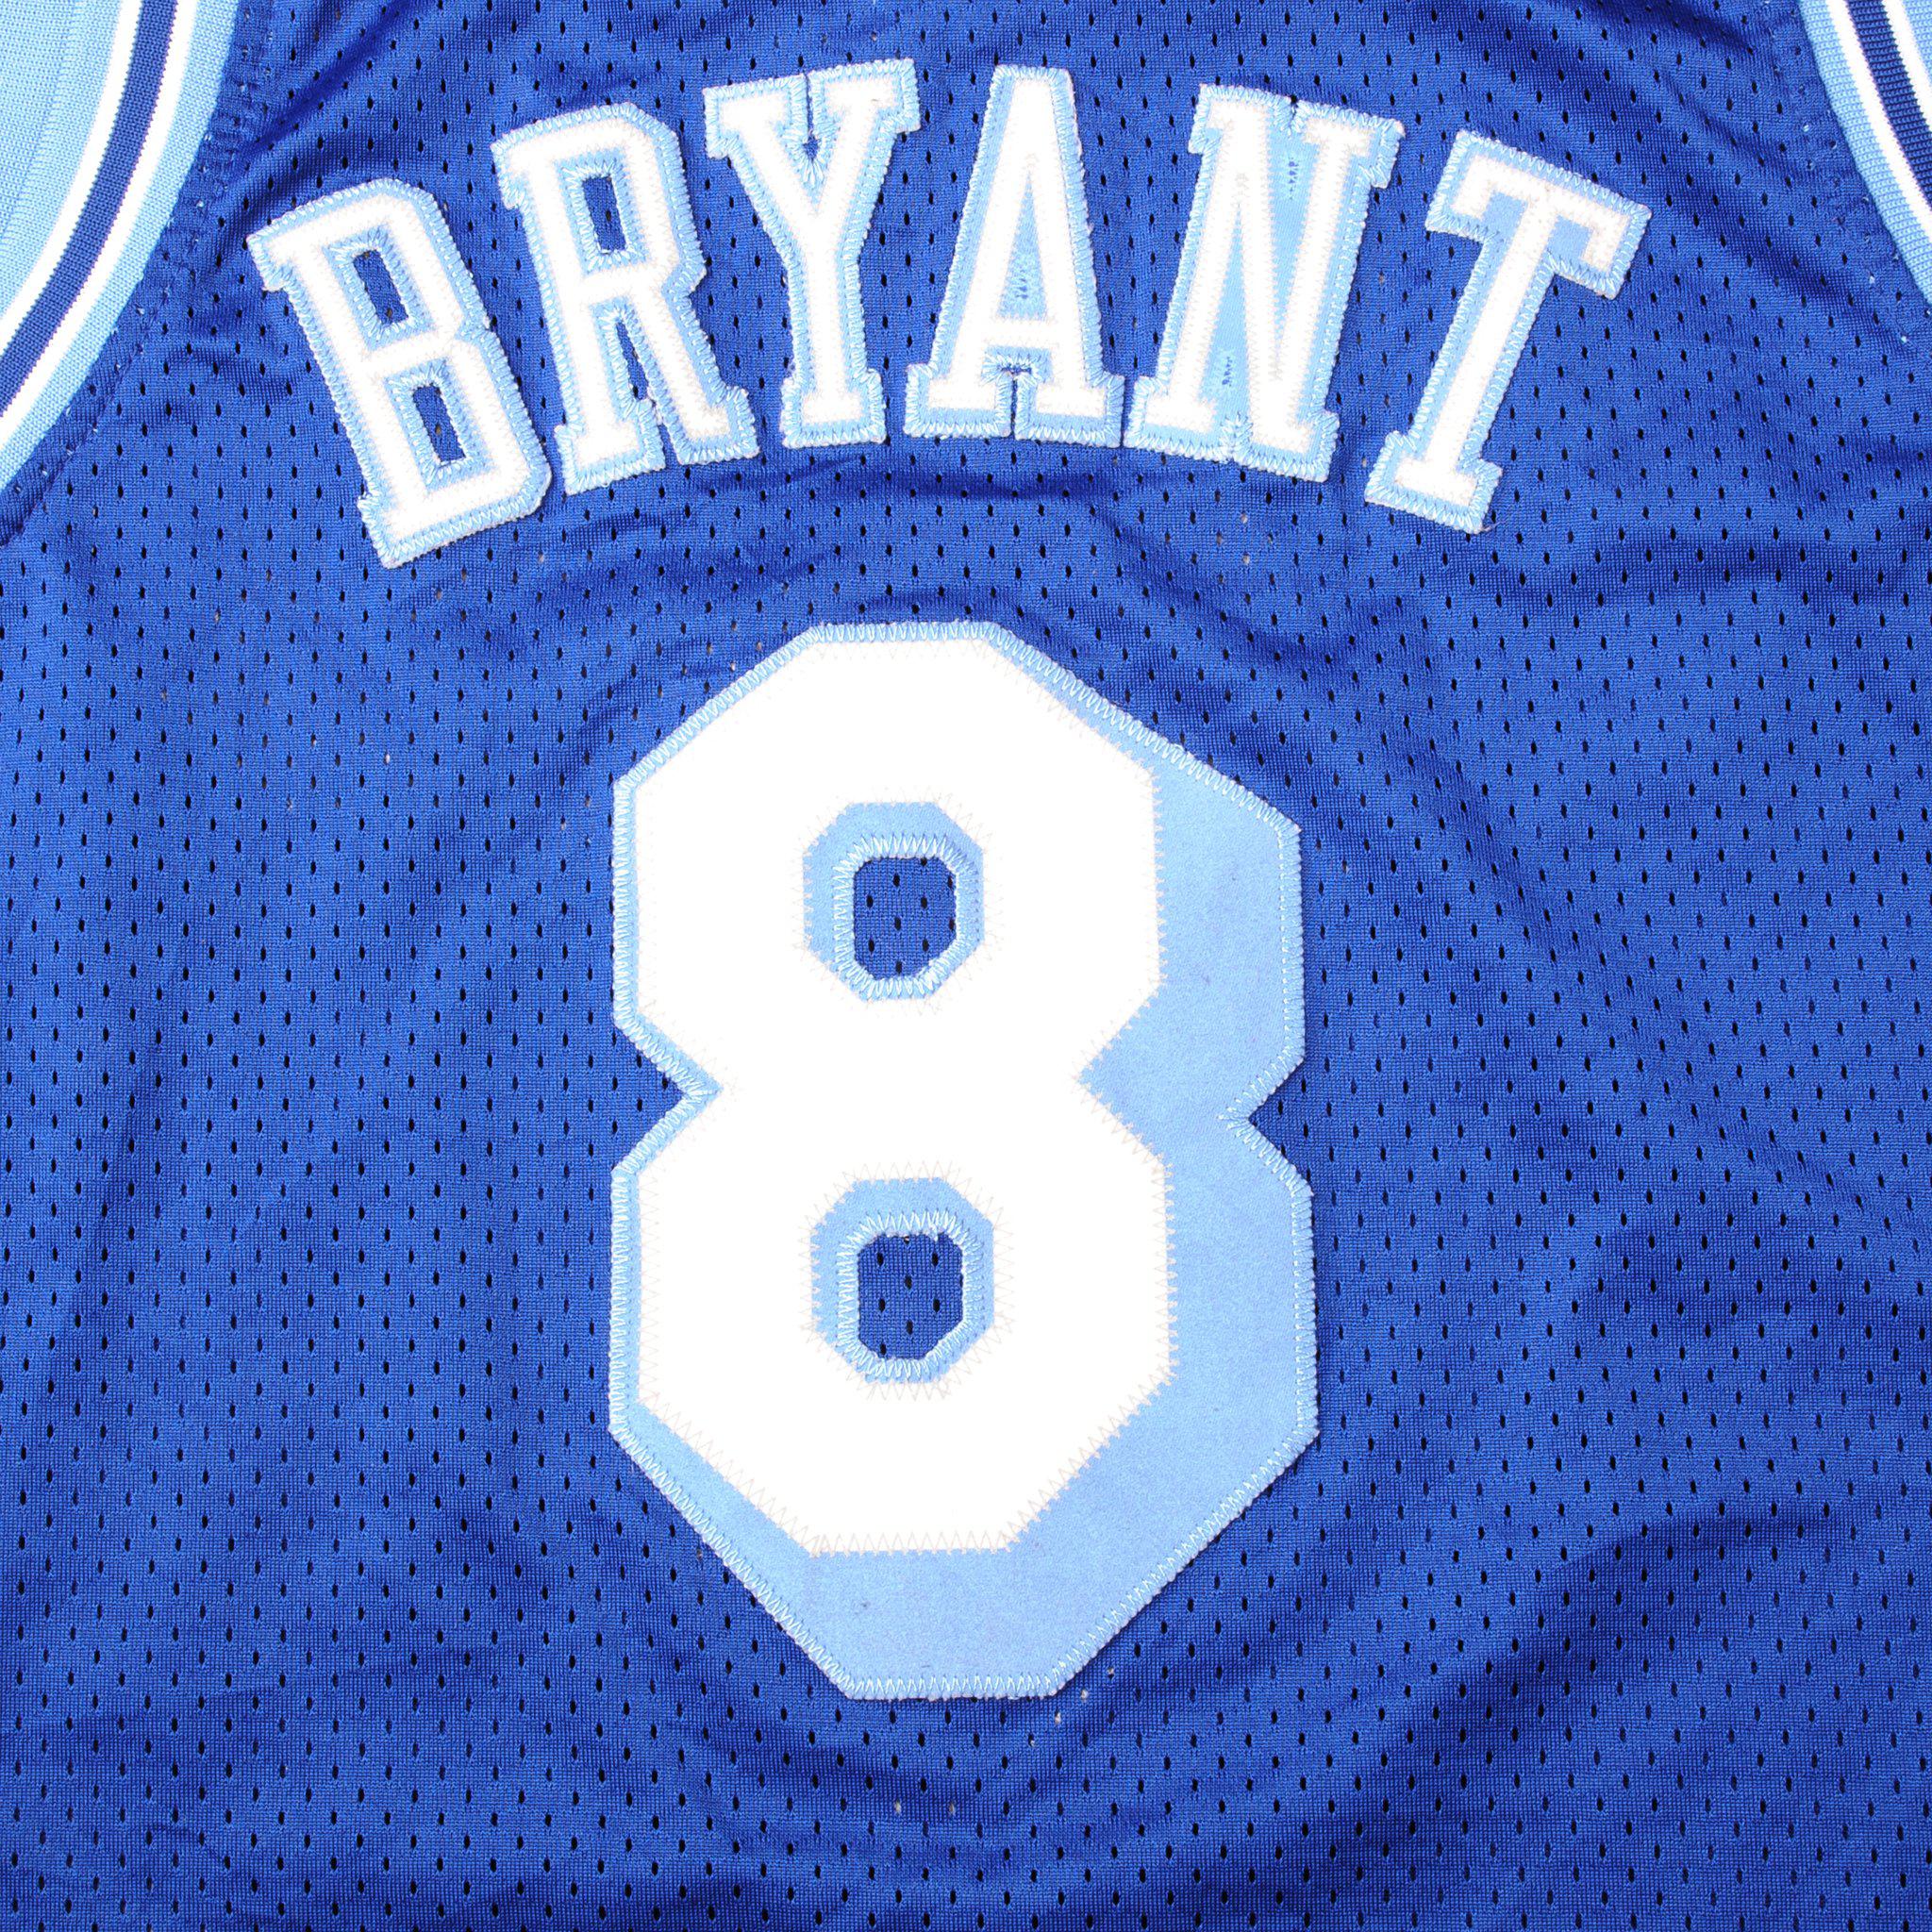 Kobe Bryant Lakers Authentic Nike City Jersey Size Men's Large 48